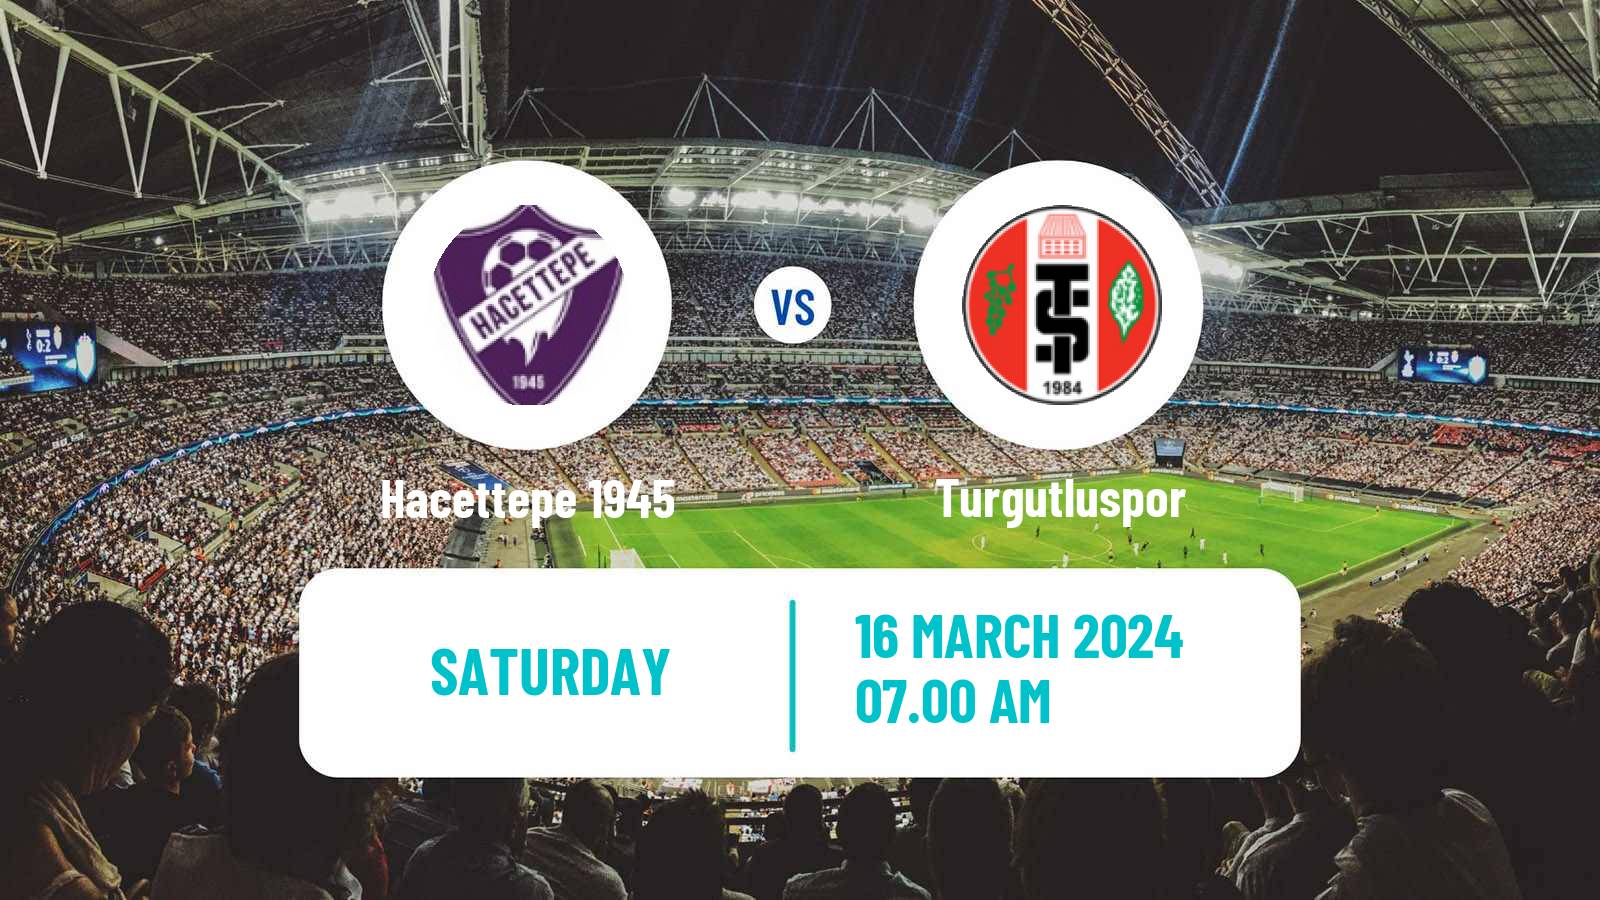 Soccer Turkish 3 Lig Group 2 Hacettepe 1945 - Turgutluspor